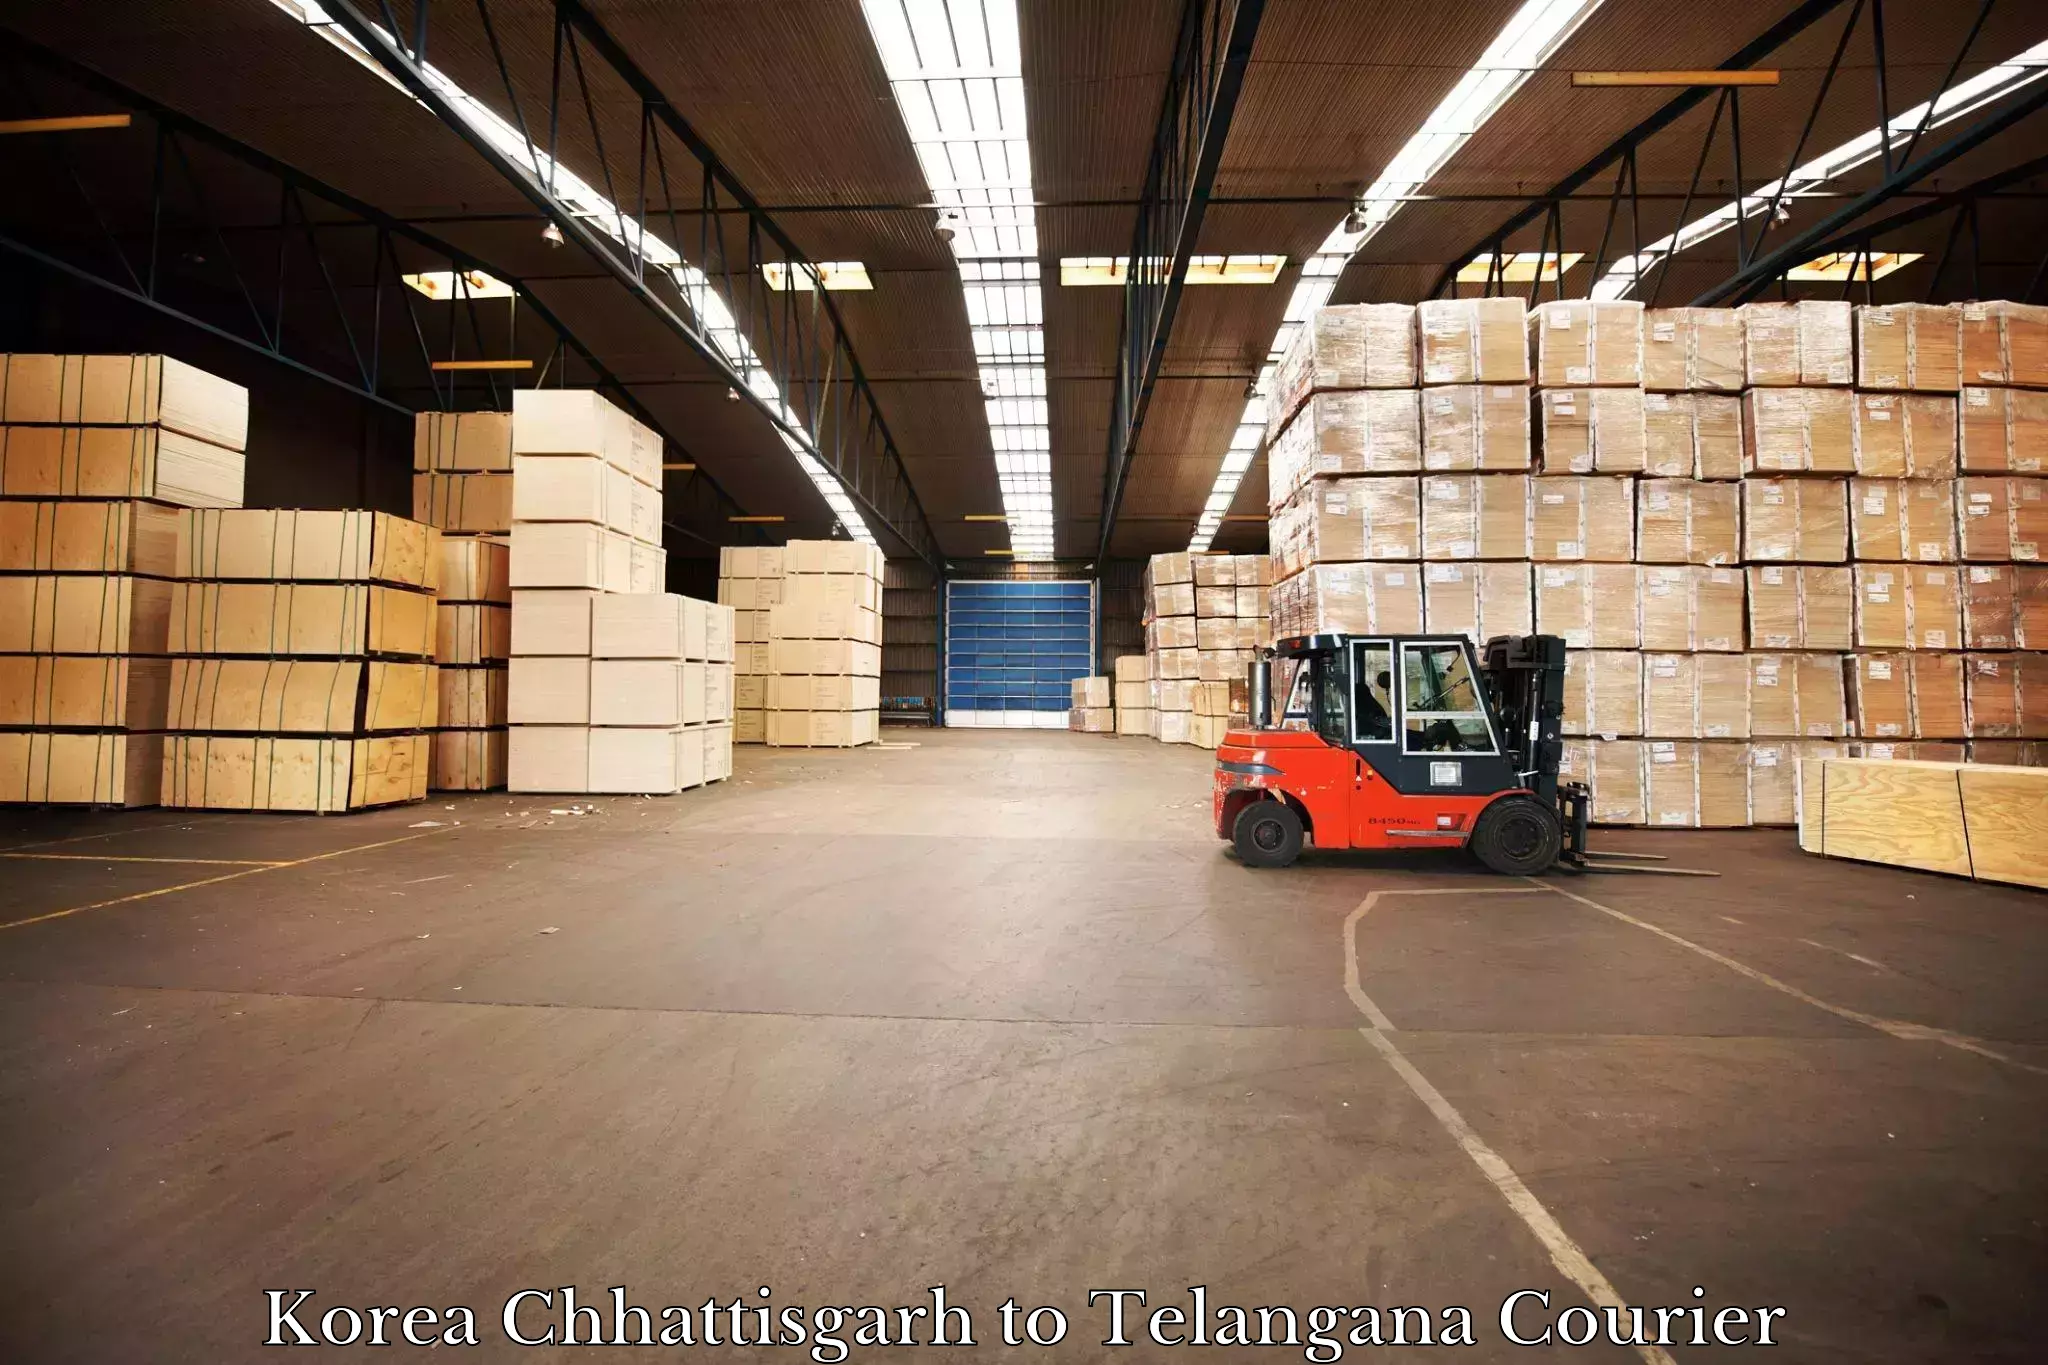 Package delivery network Korea Chhattisgarh to Manneguda